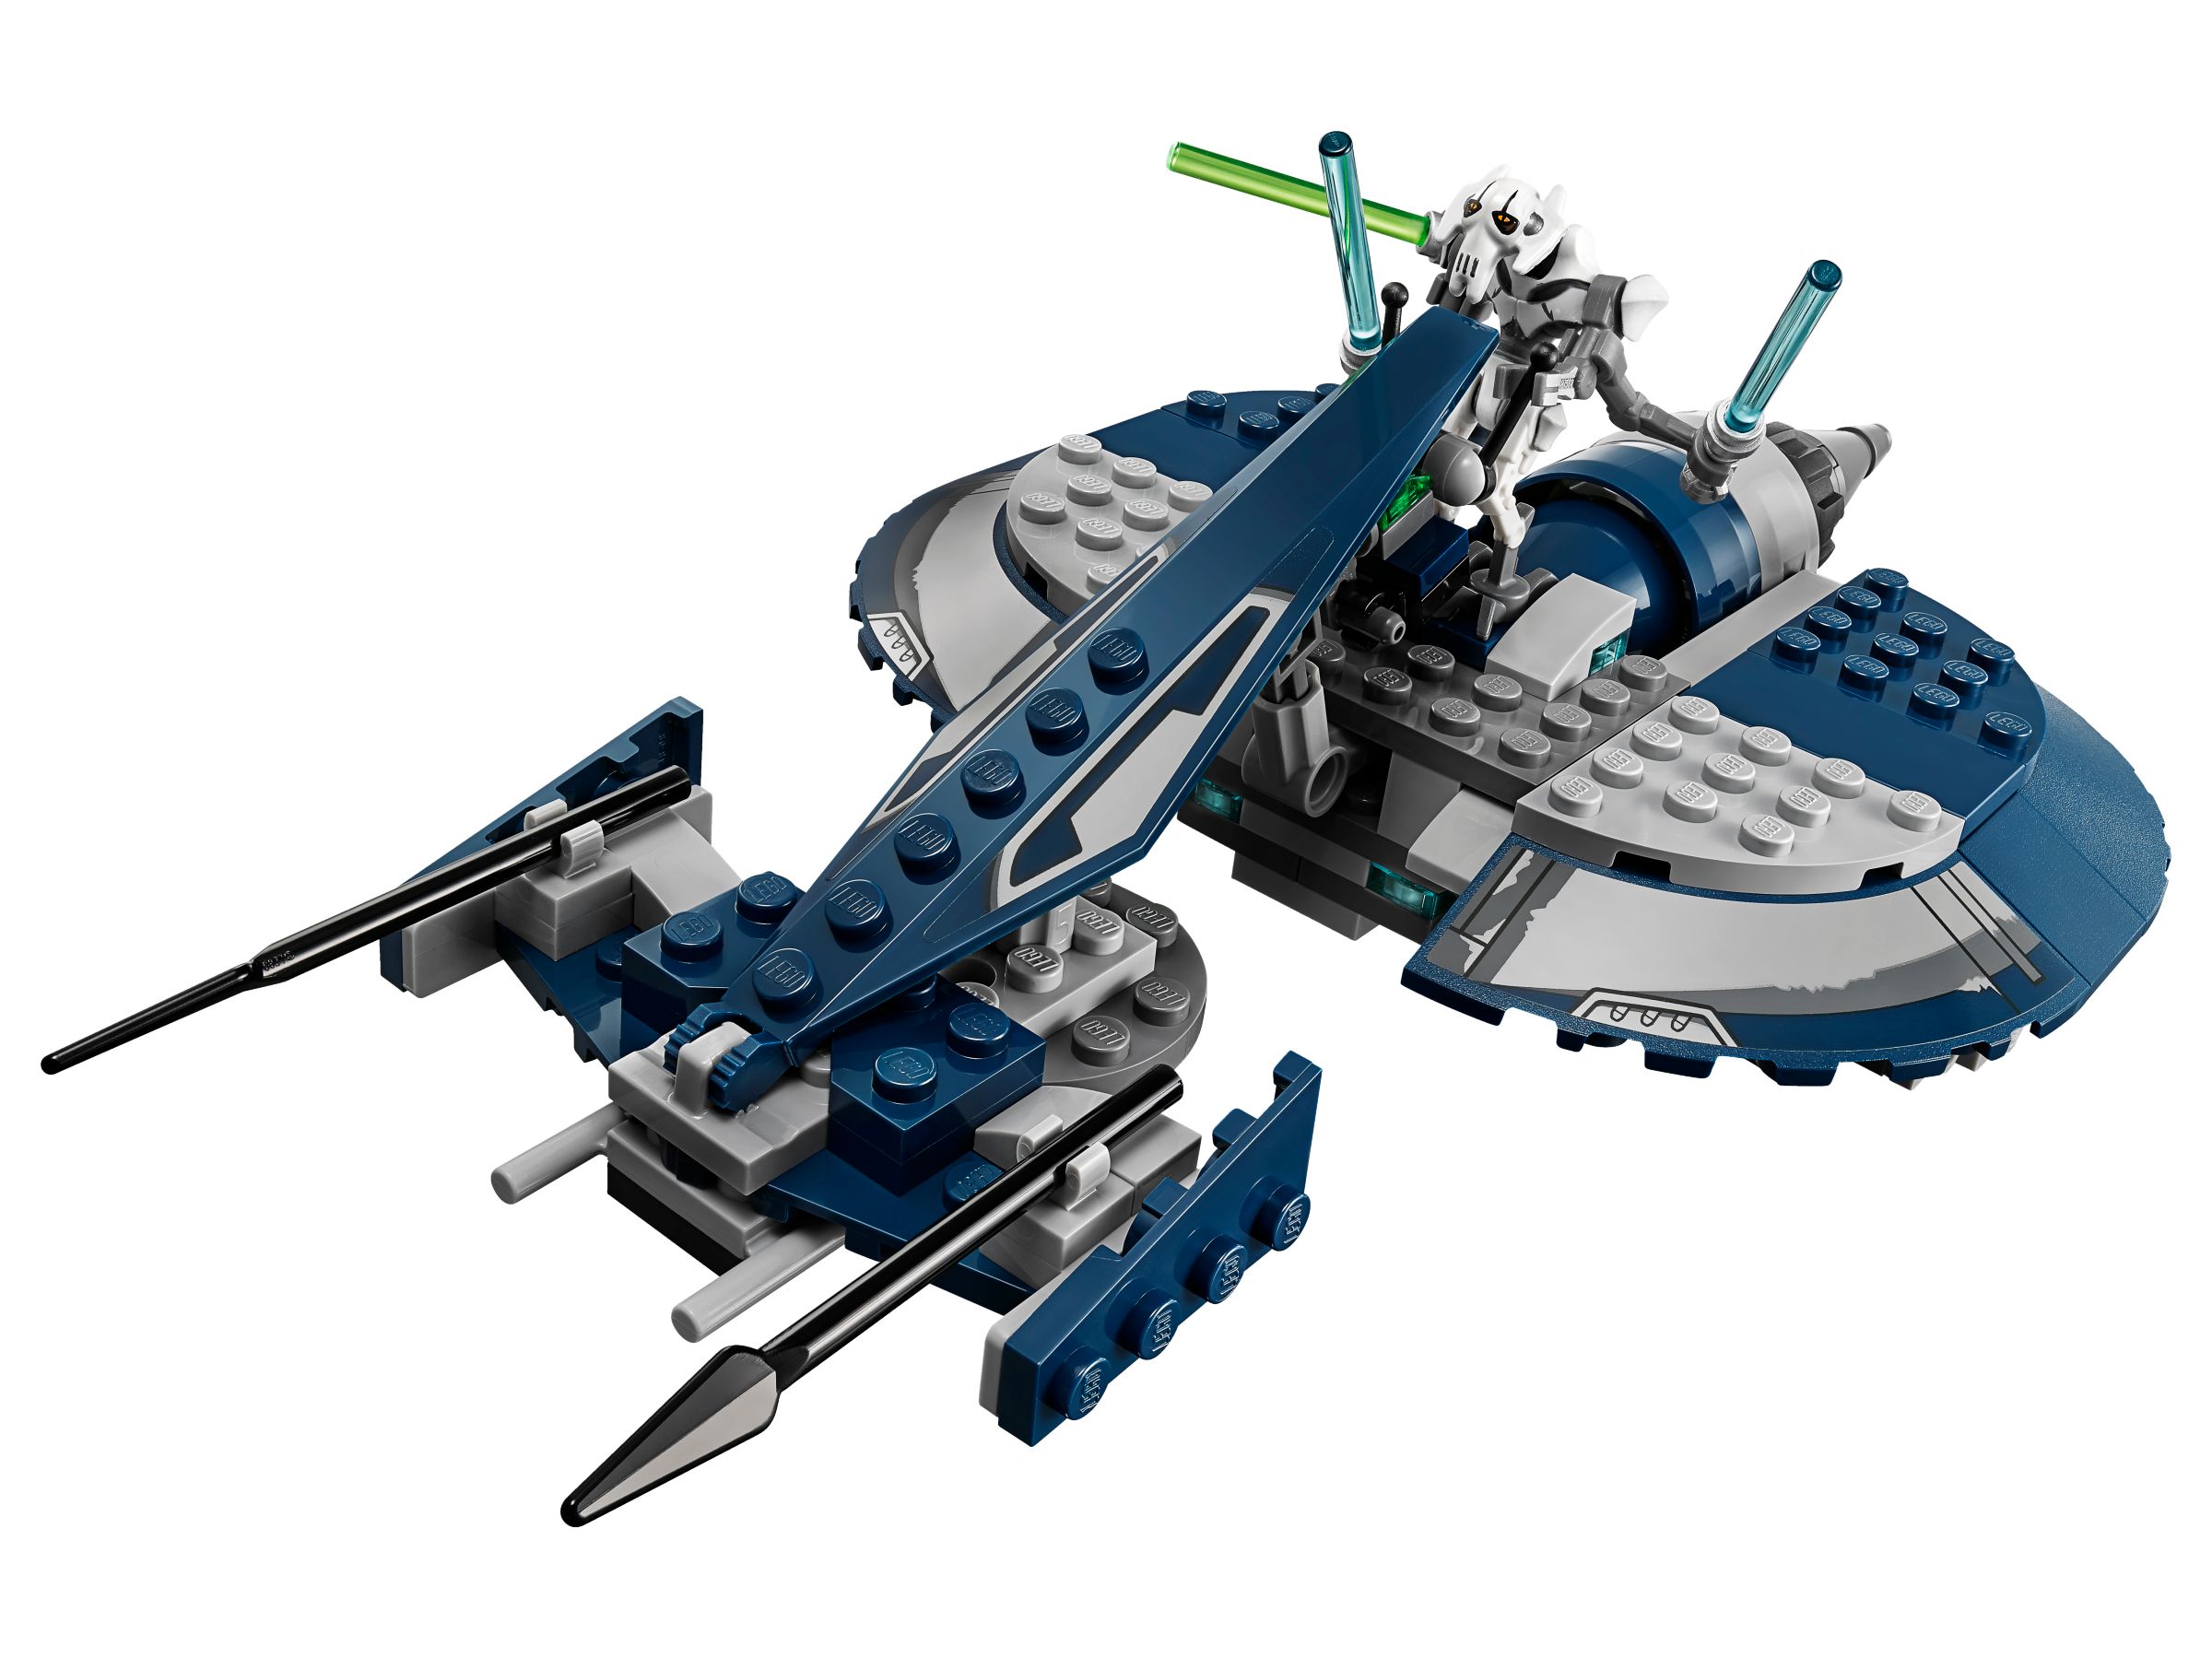 LEGO Star Wars 75199 General Grievous Combat Speeder LEGO_75199_alt3.jpg